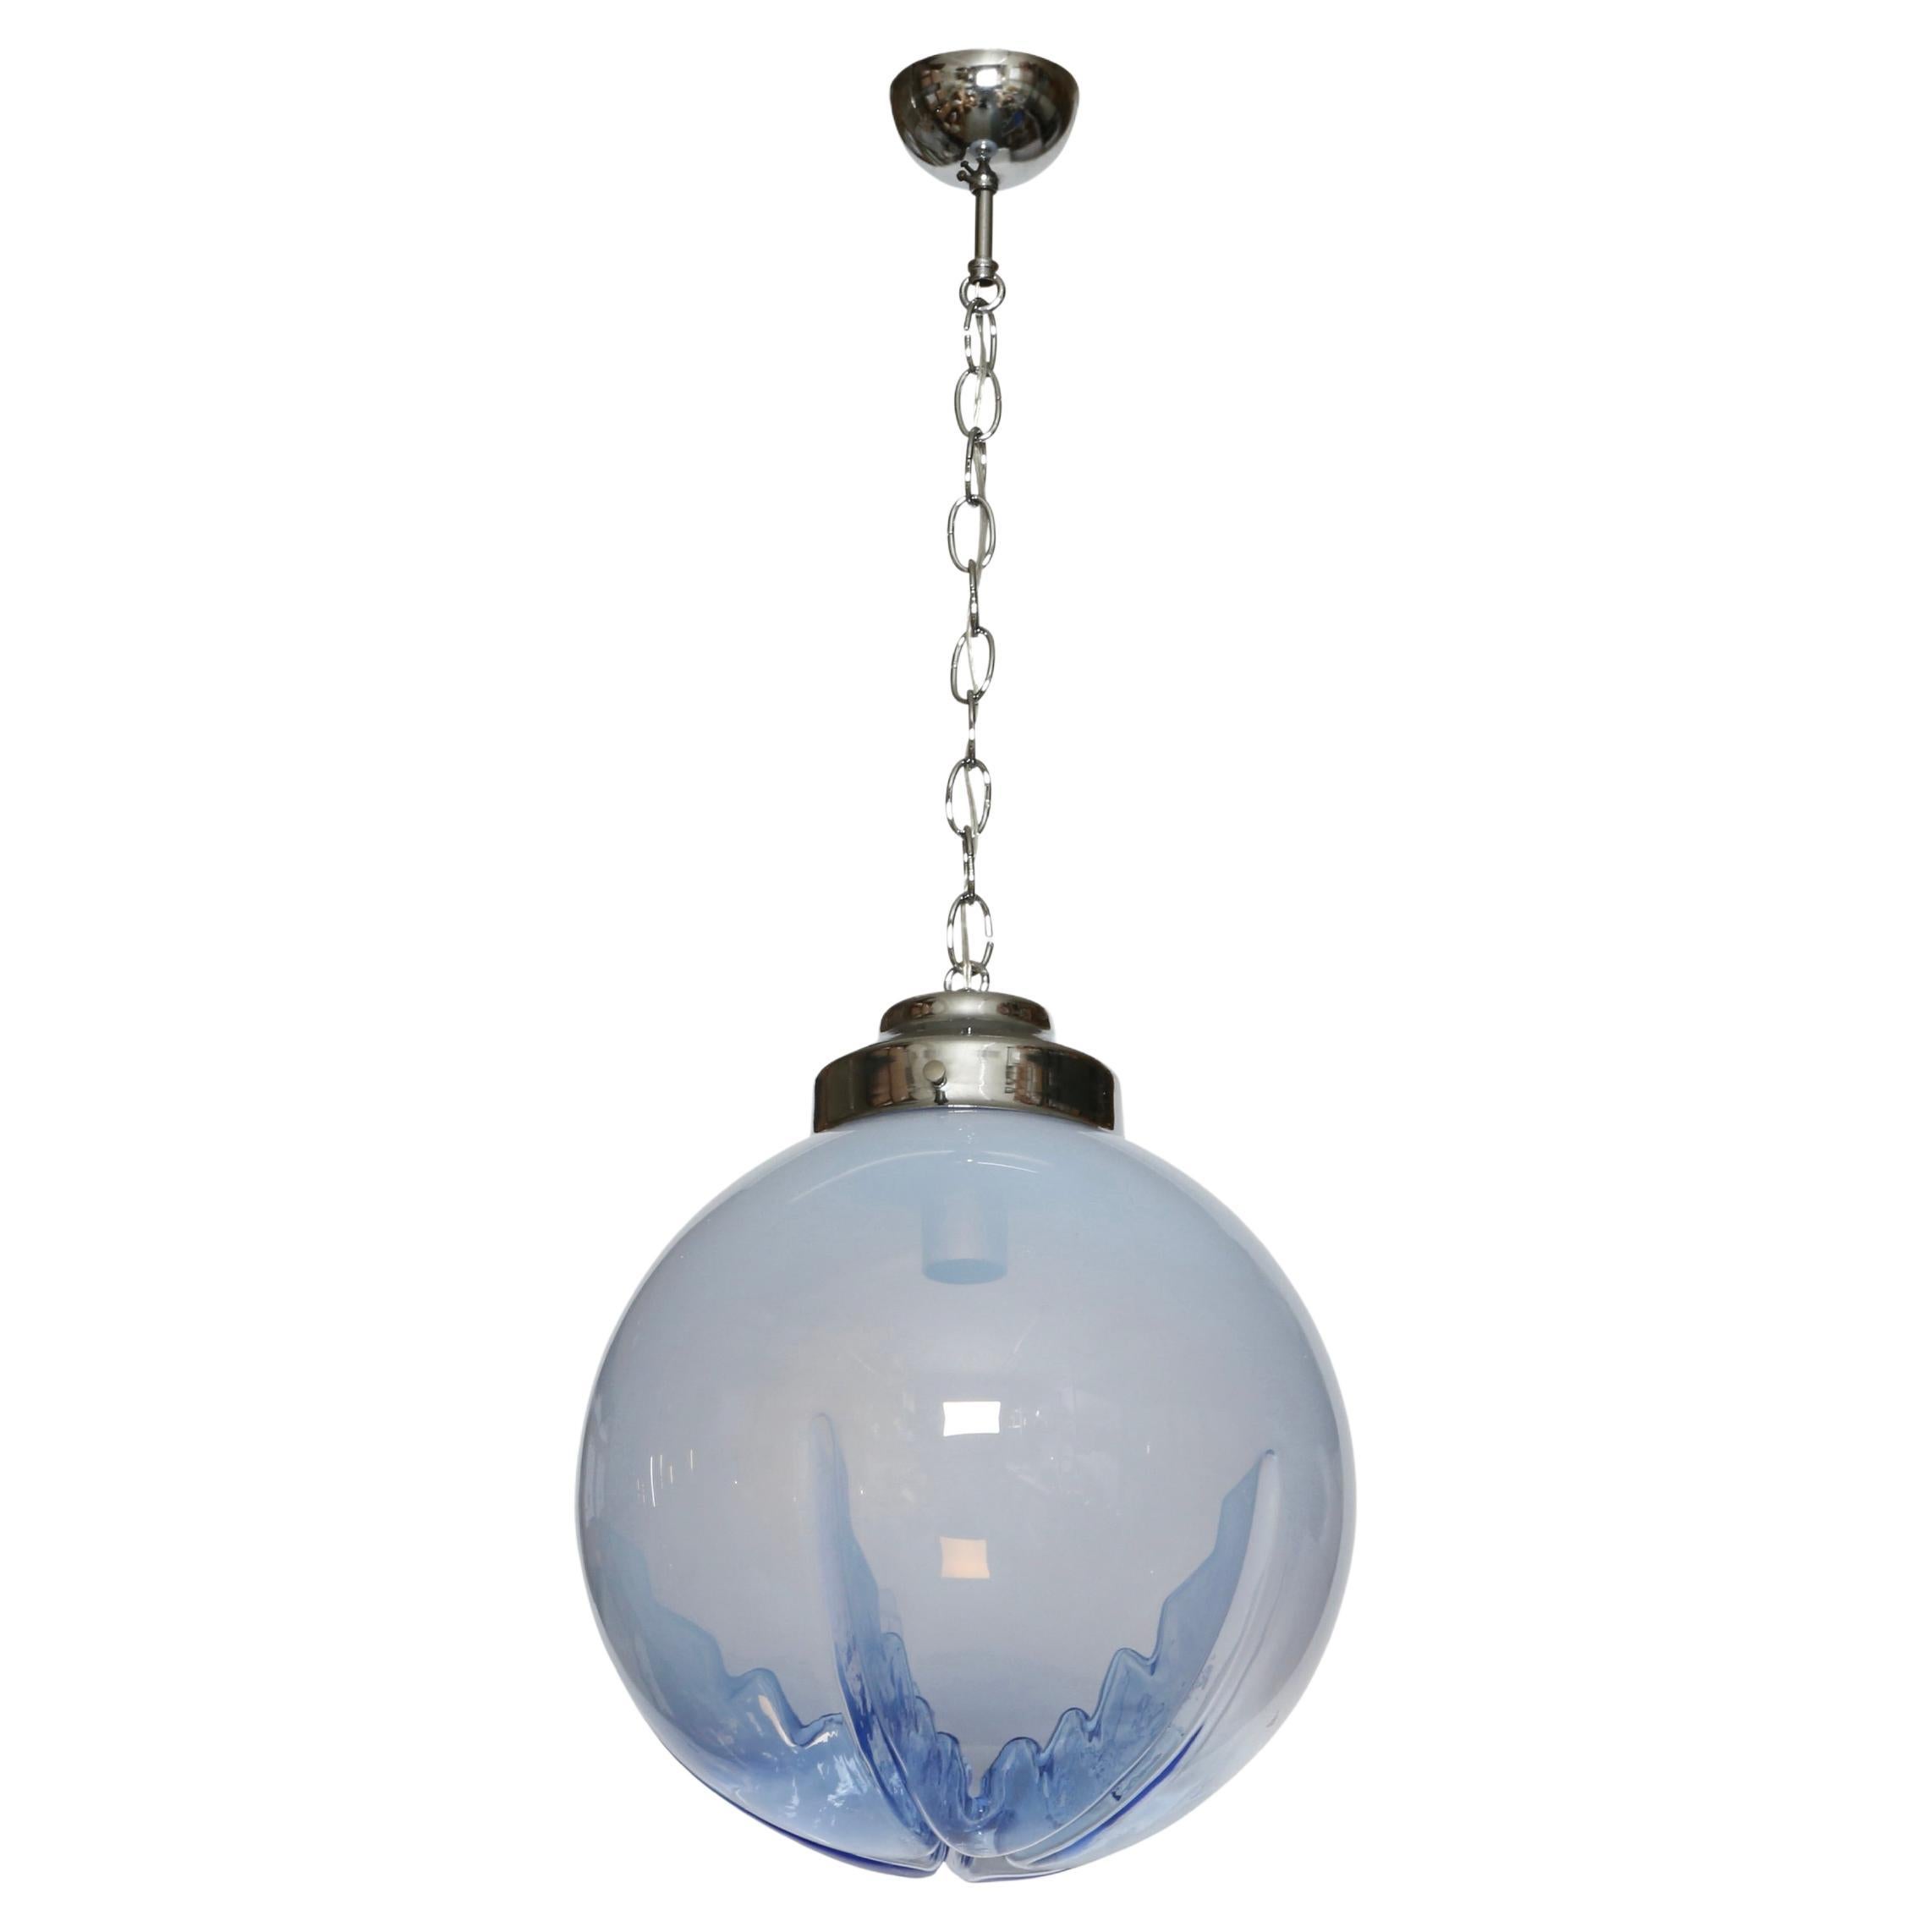 Murano glass ceiling pendant by Mazzega